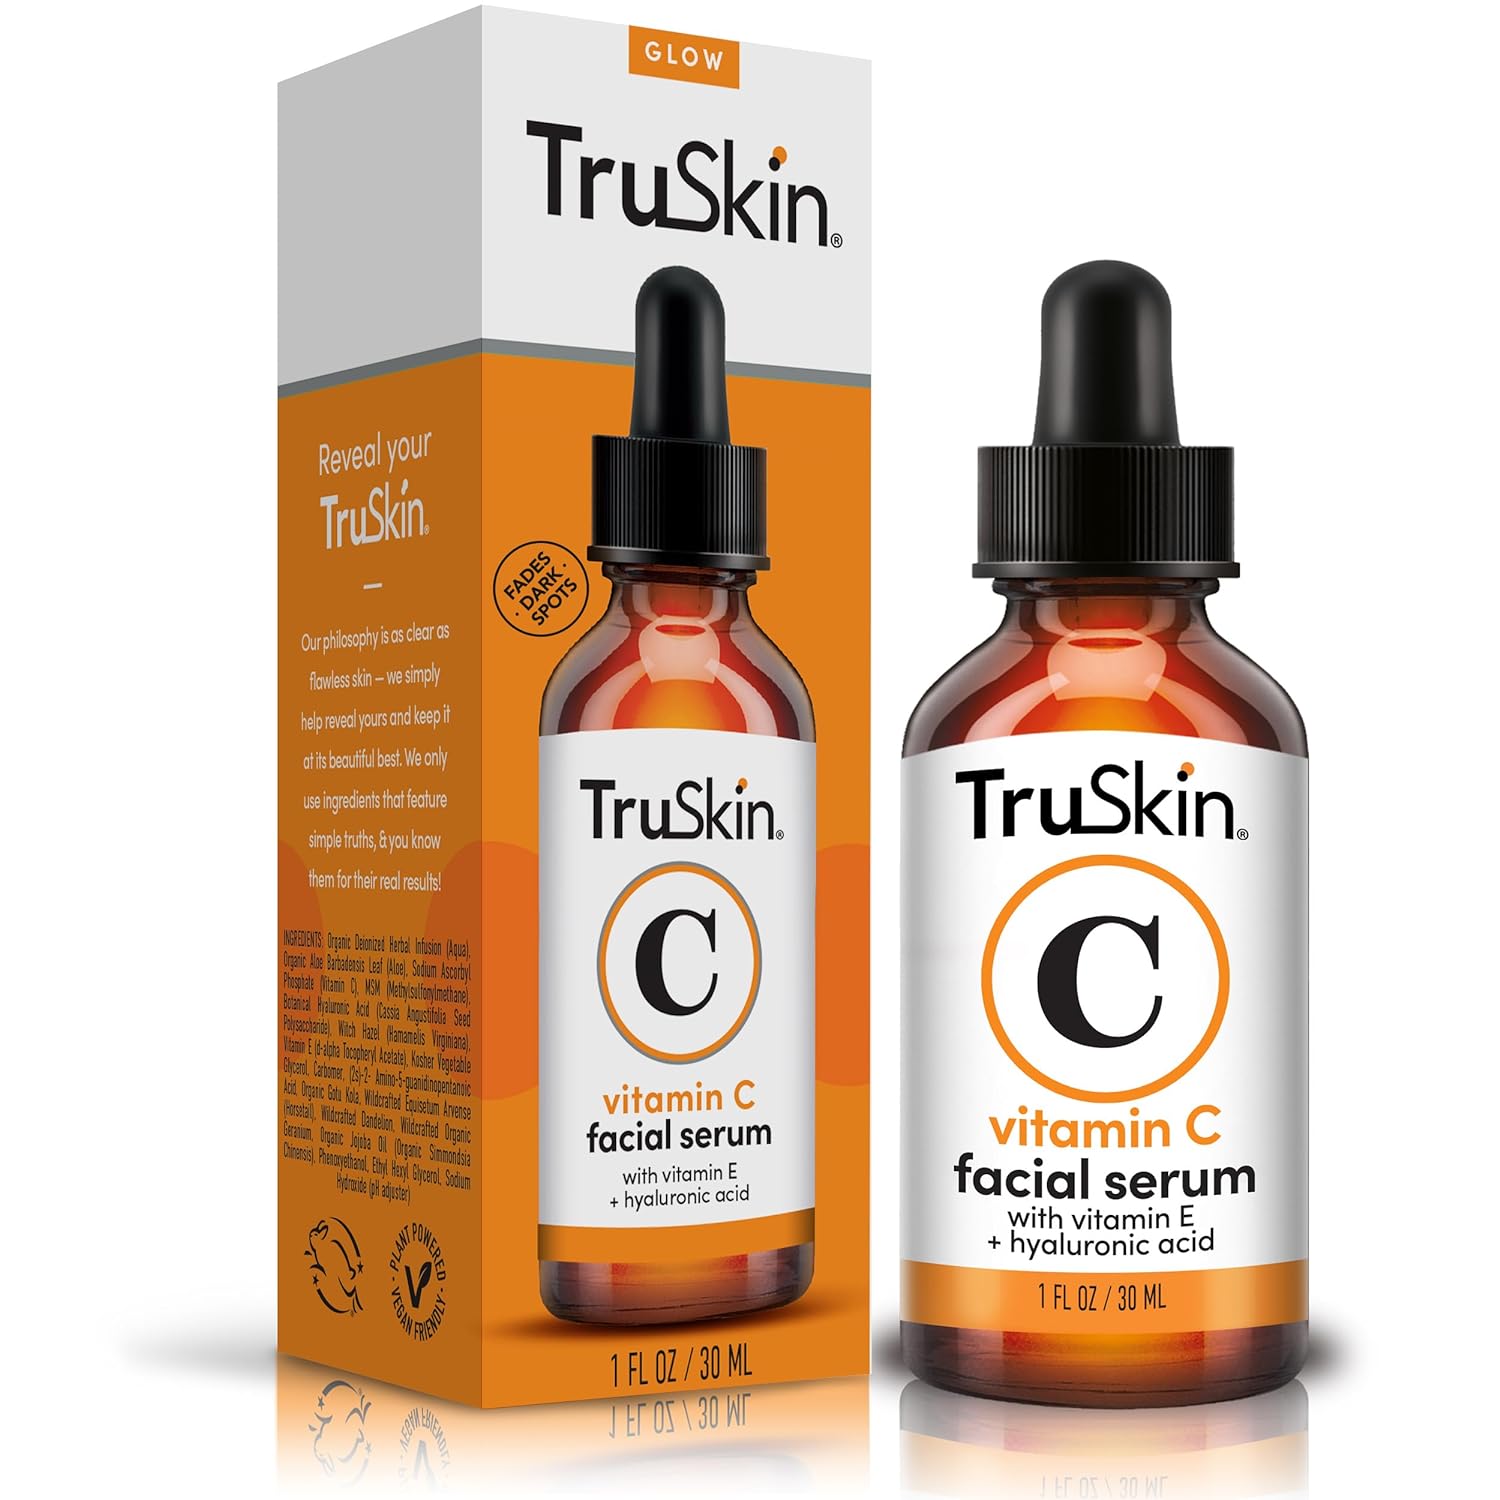 TruSkin Vitamin C Face Serum Review